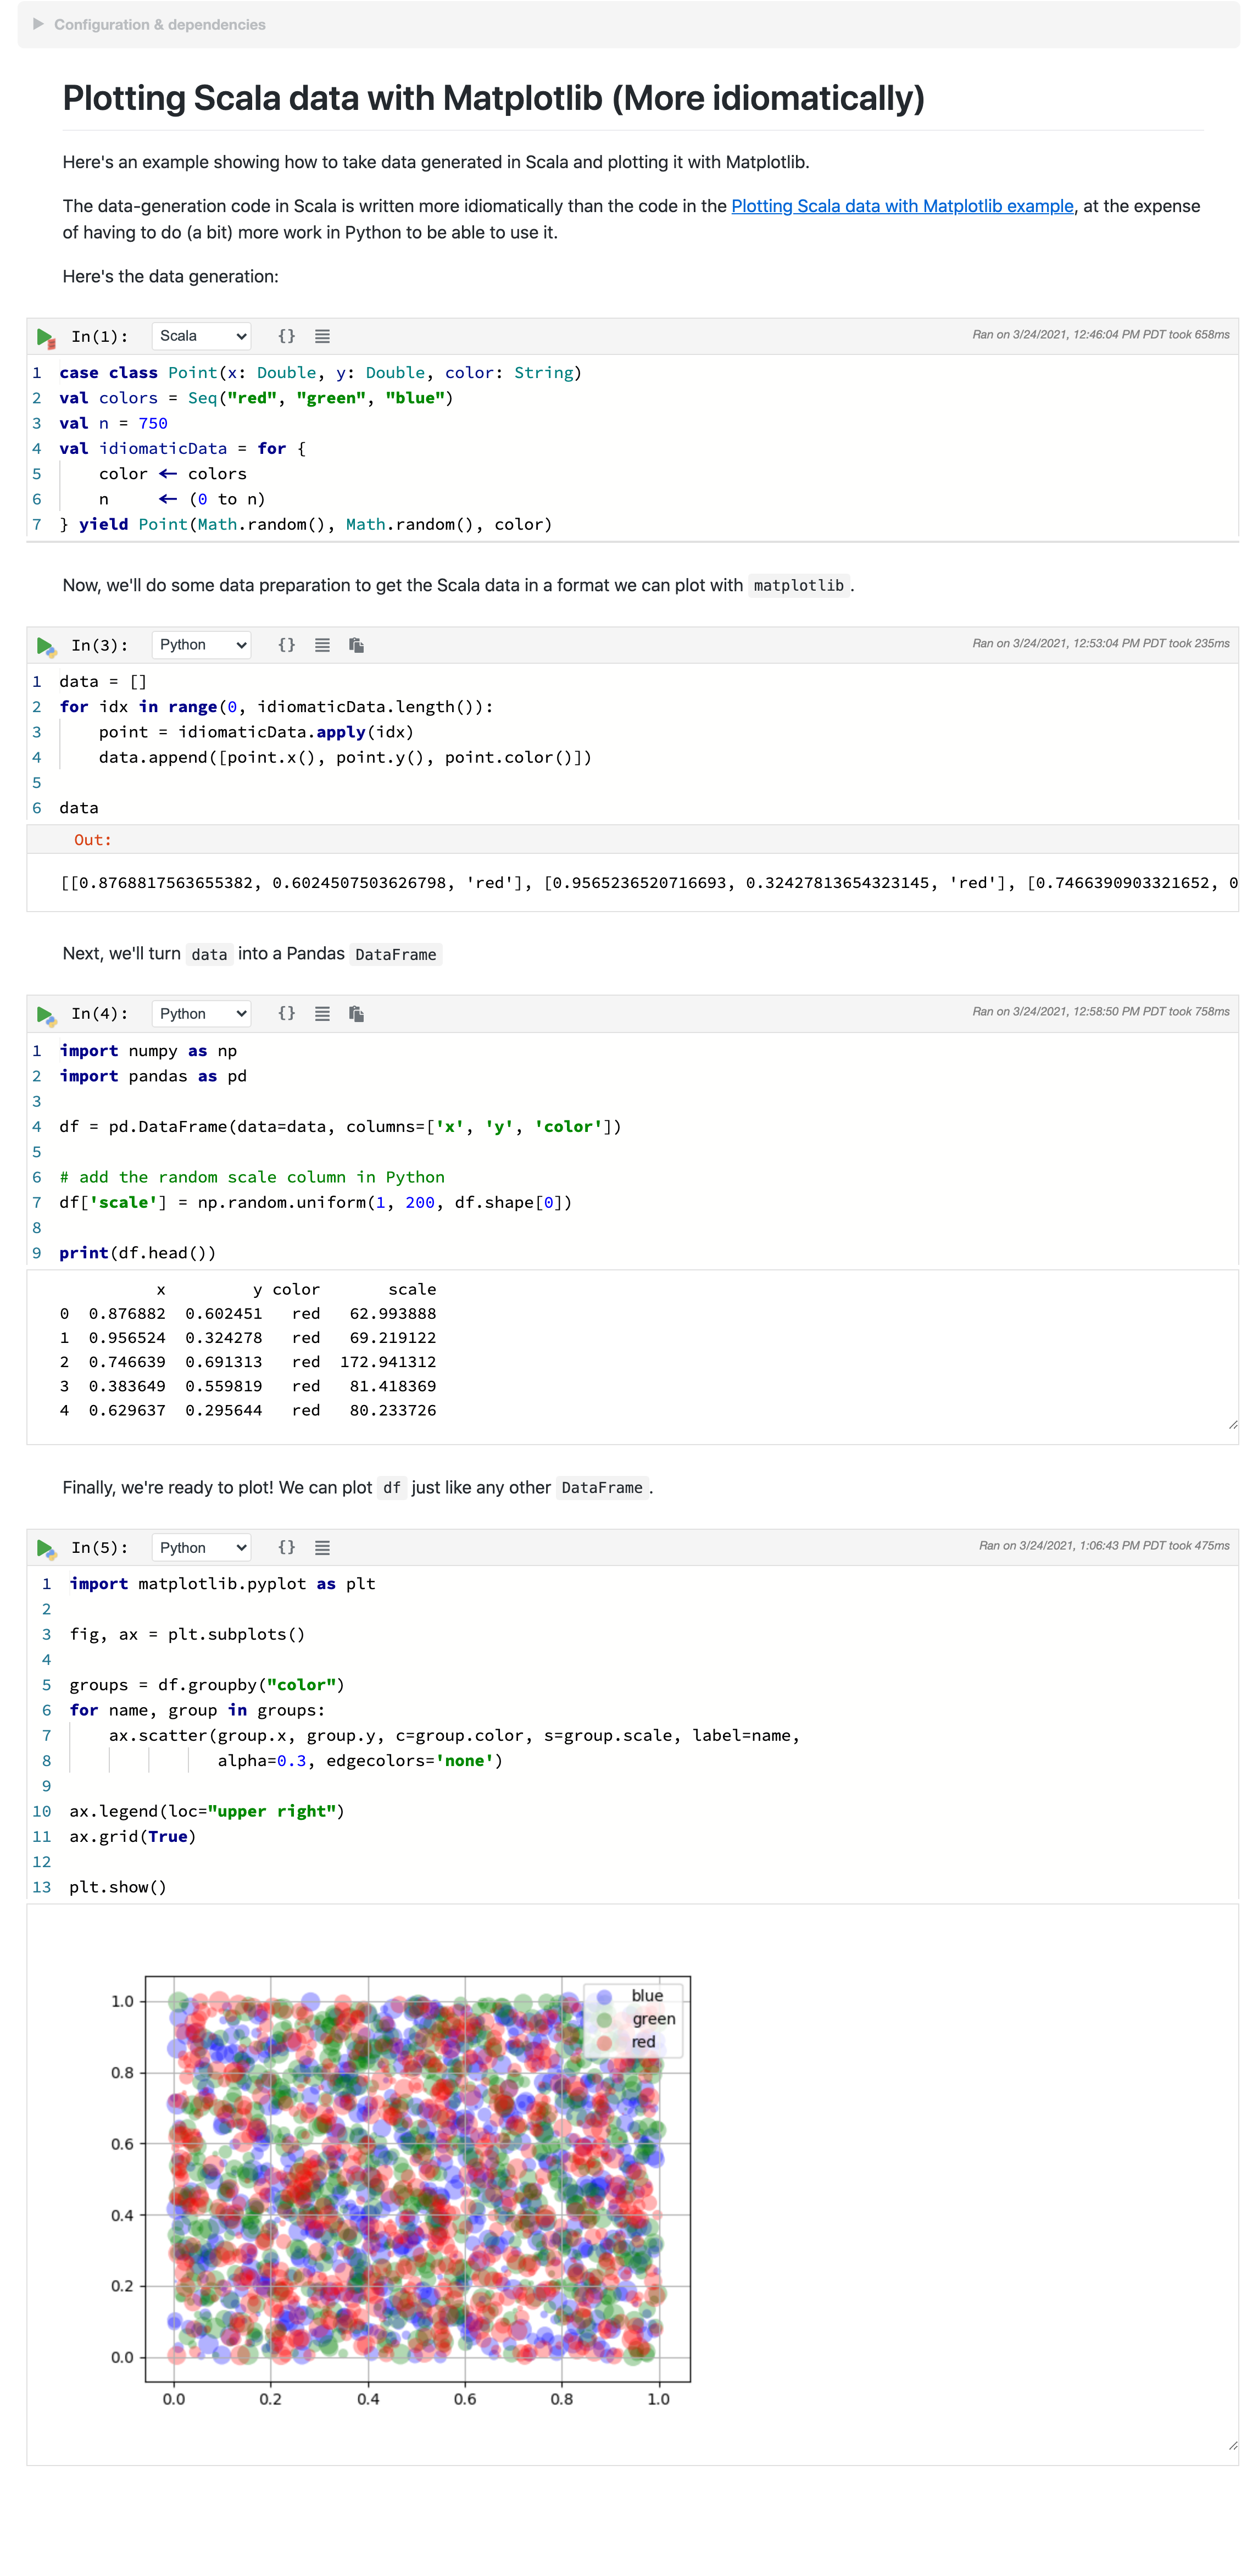 Plotting Scala data with matplotlib through Python, idiomatically